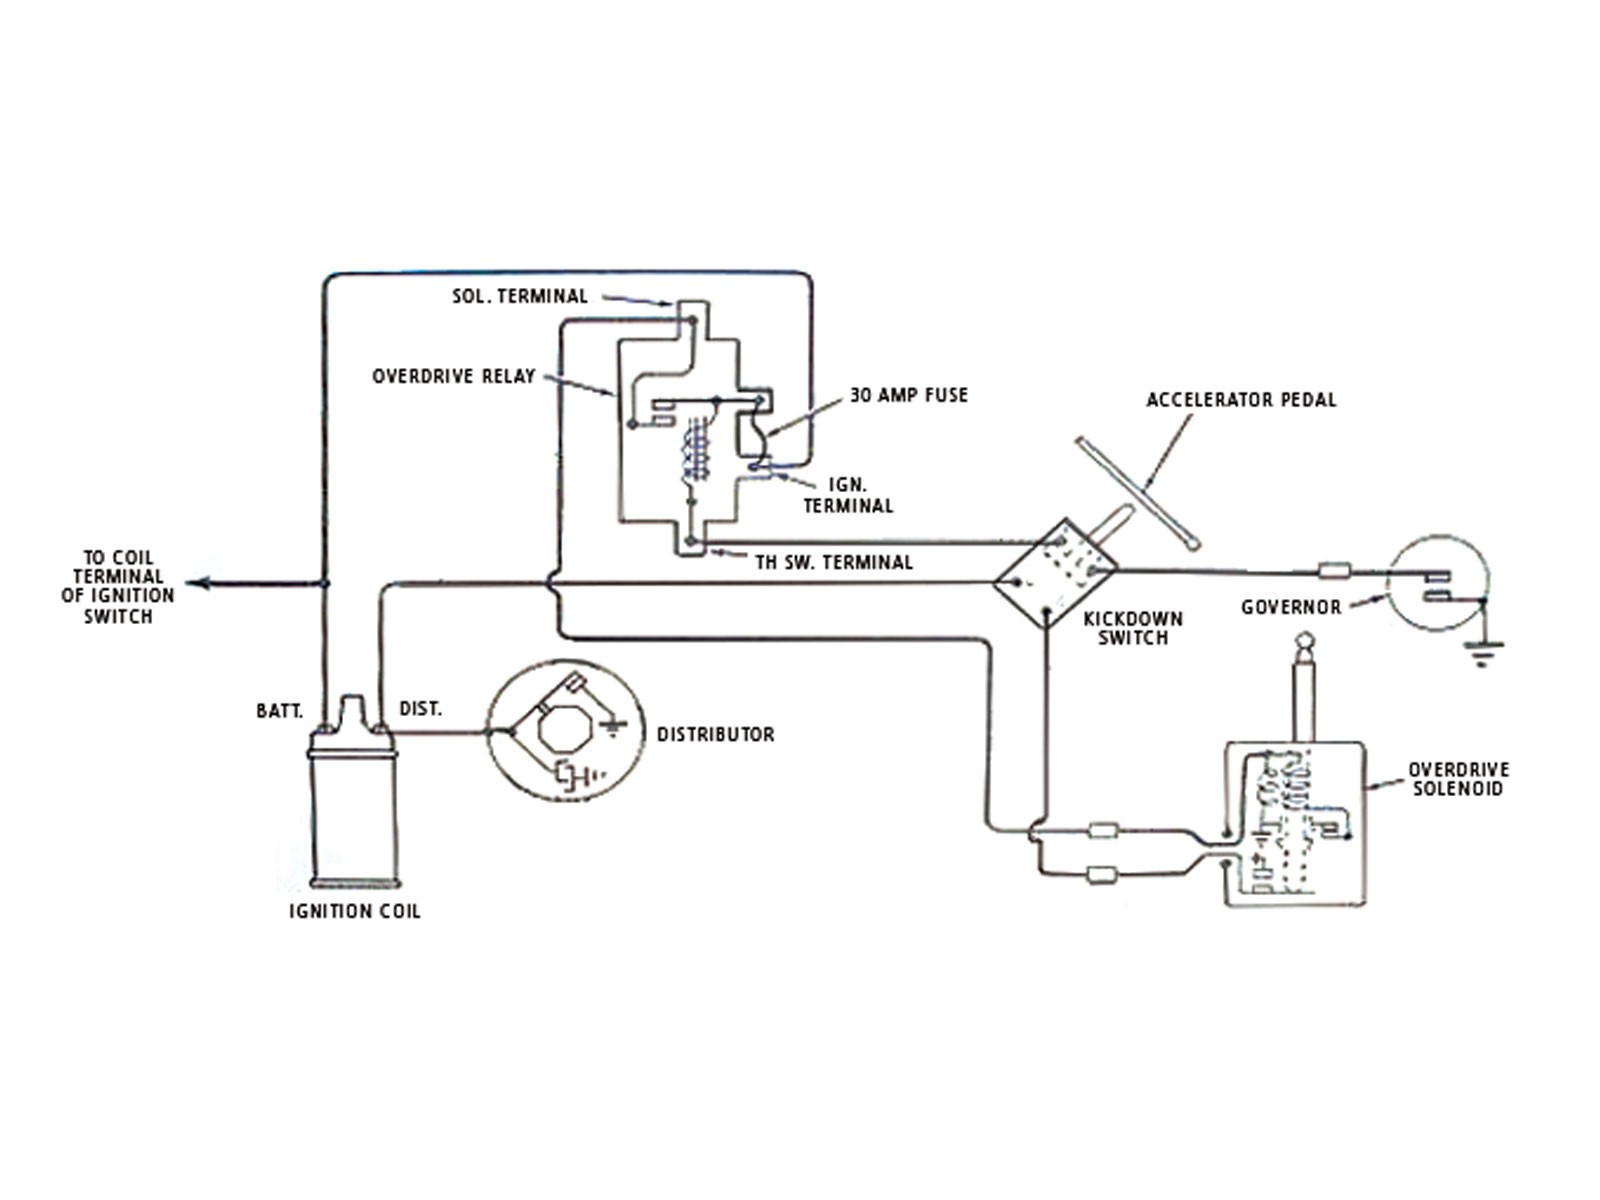 Wiring Diagram Automotive Relay New Automotive Switch Wiring Diagram New Wiring Diagram Safety Relay